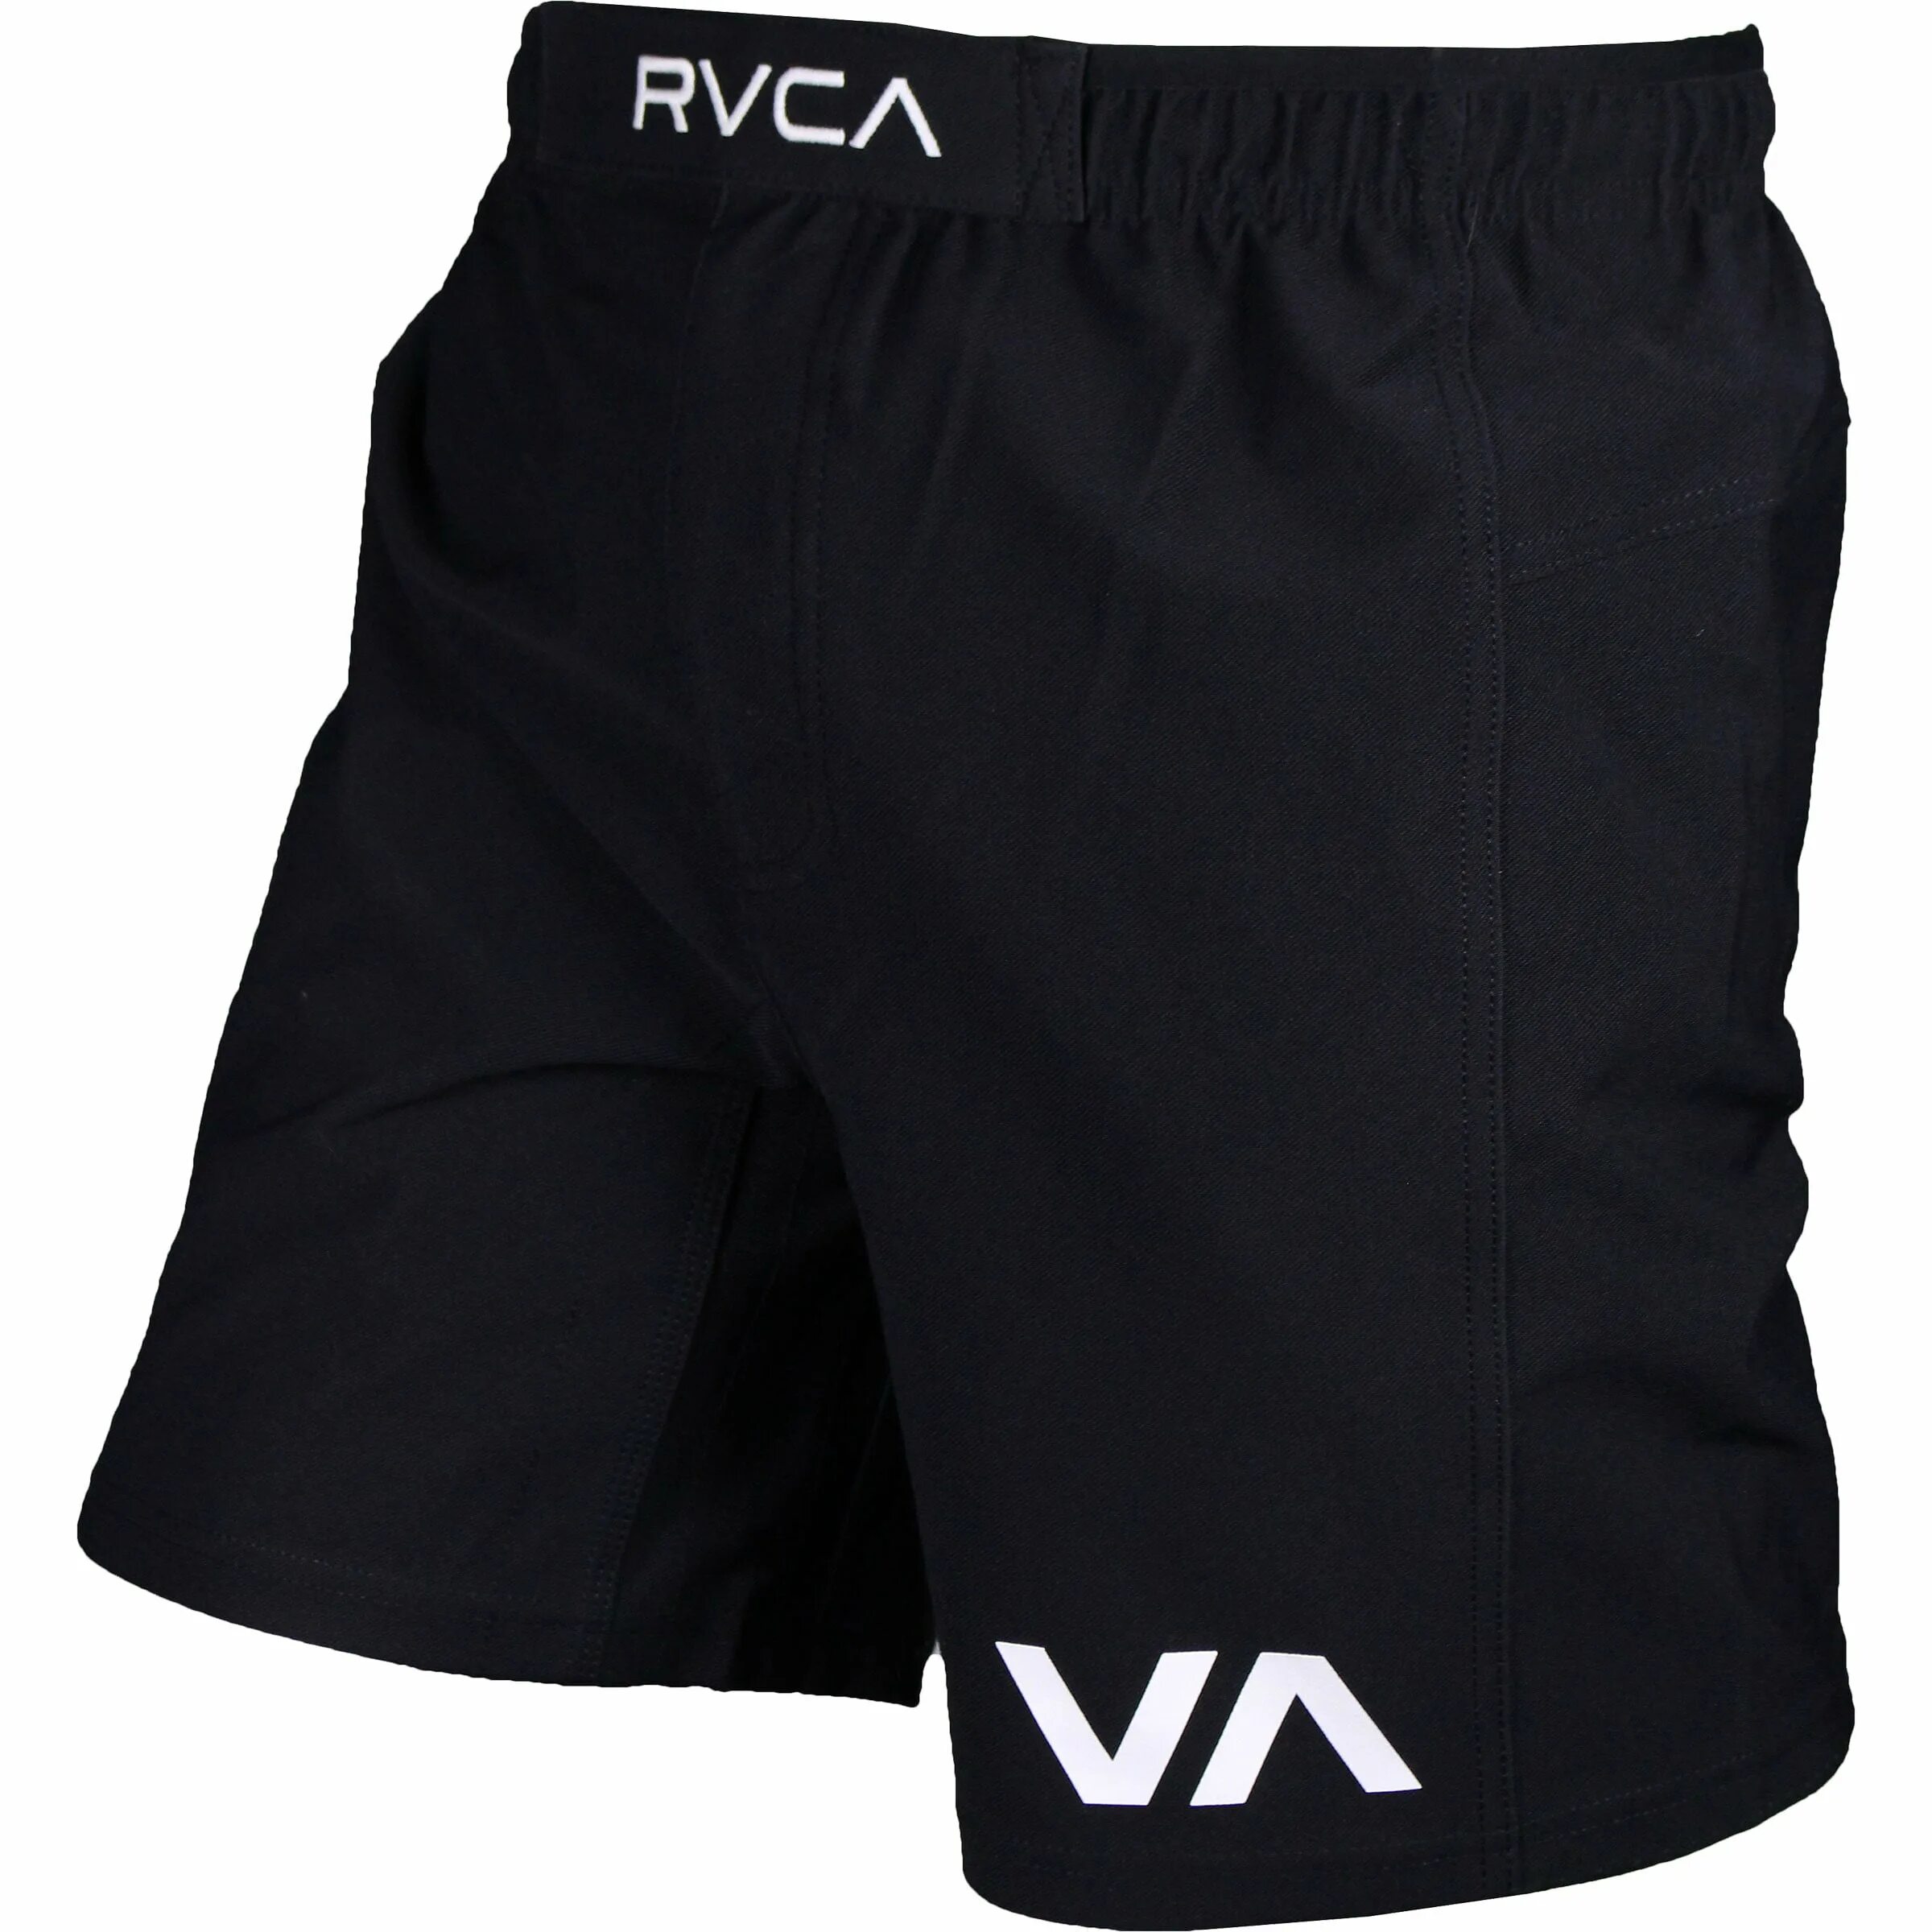 Шорты RVCA. RVCA MMA shorts. Шорты ММА найк. MMA шорты Fighter.